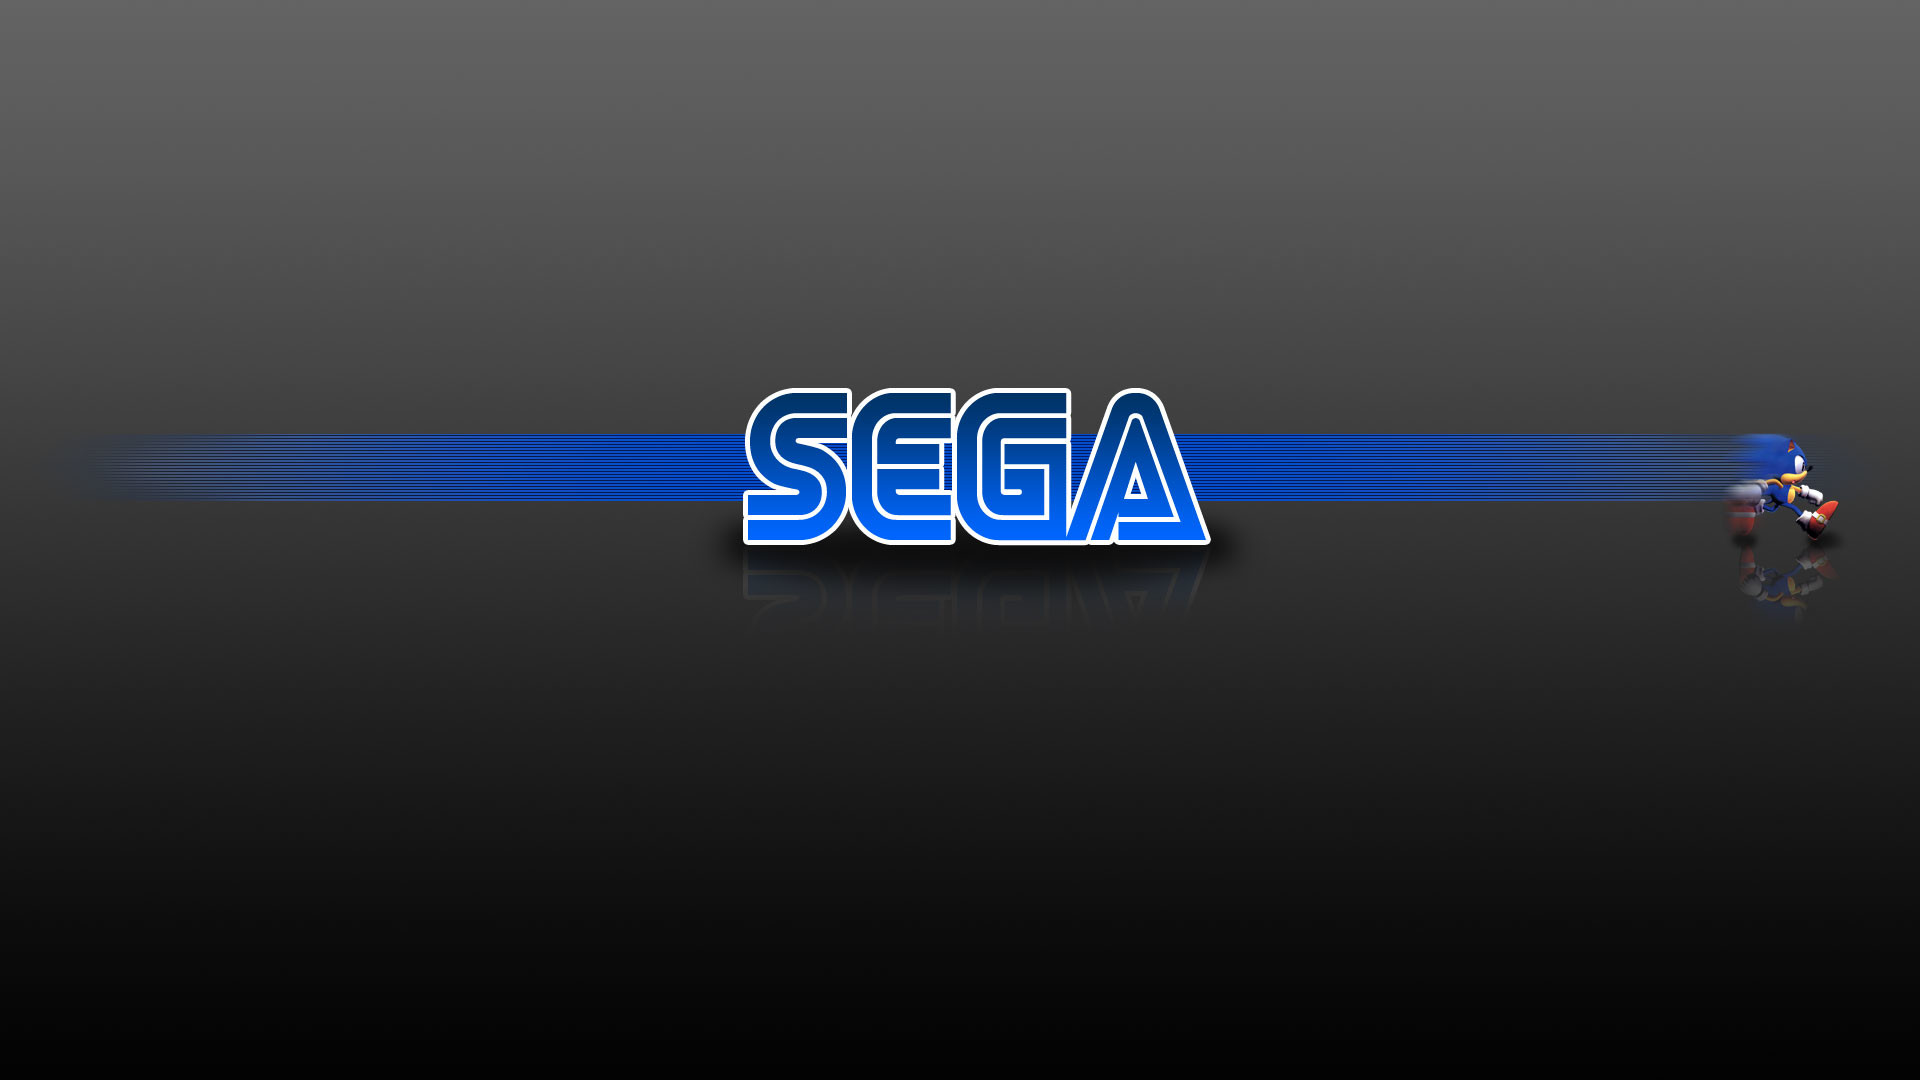 Sega Wallpaper Images & Pictures – Becuo